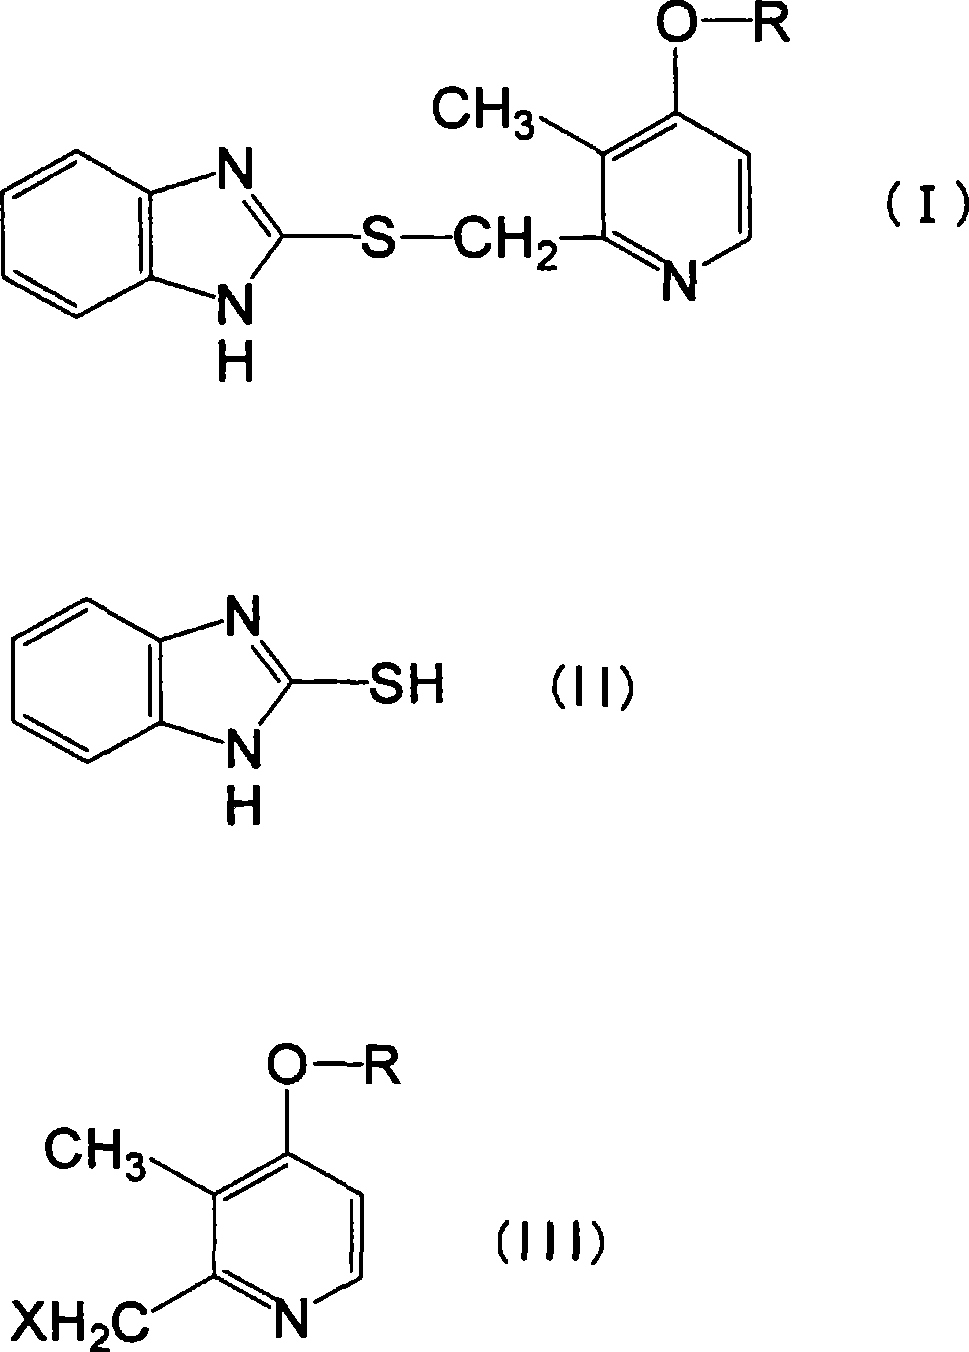 Novel pyridine derivative having anti-helicobacter pylori activity